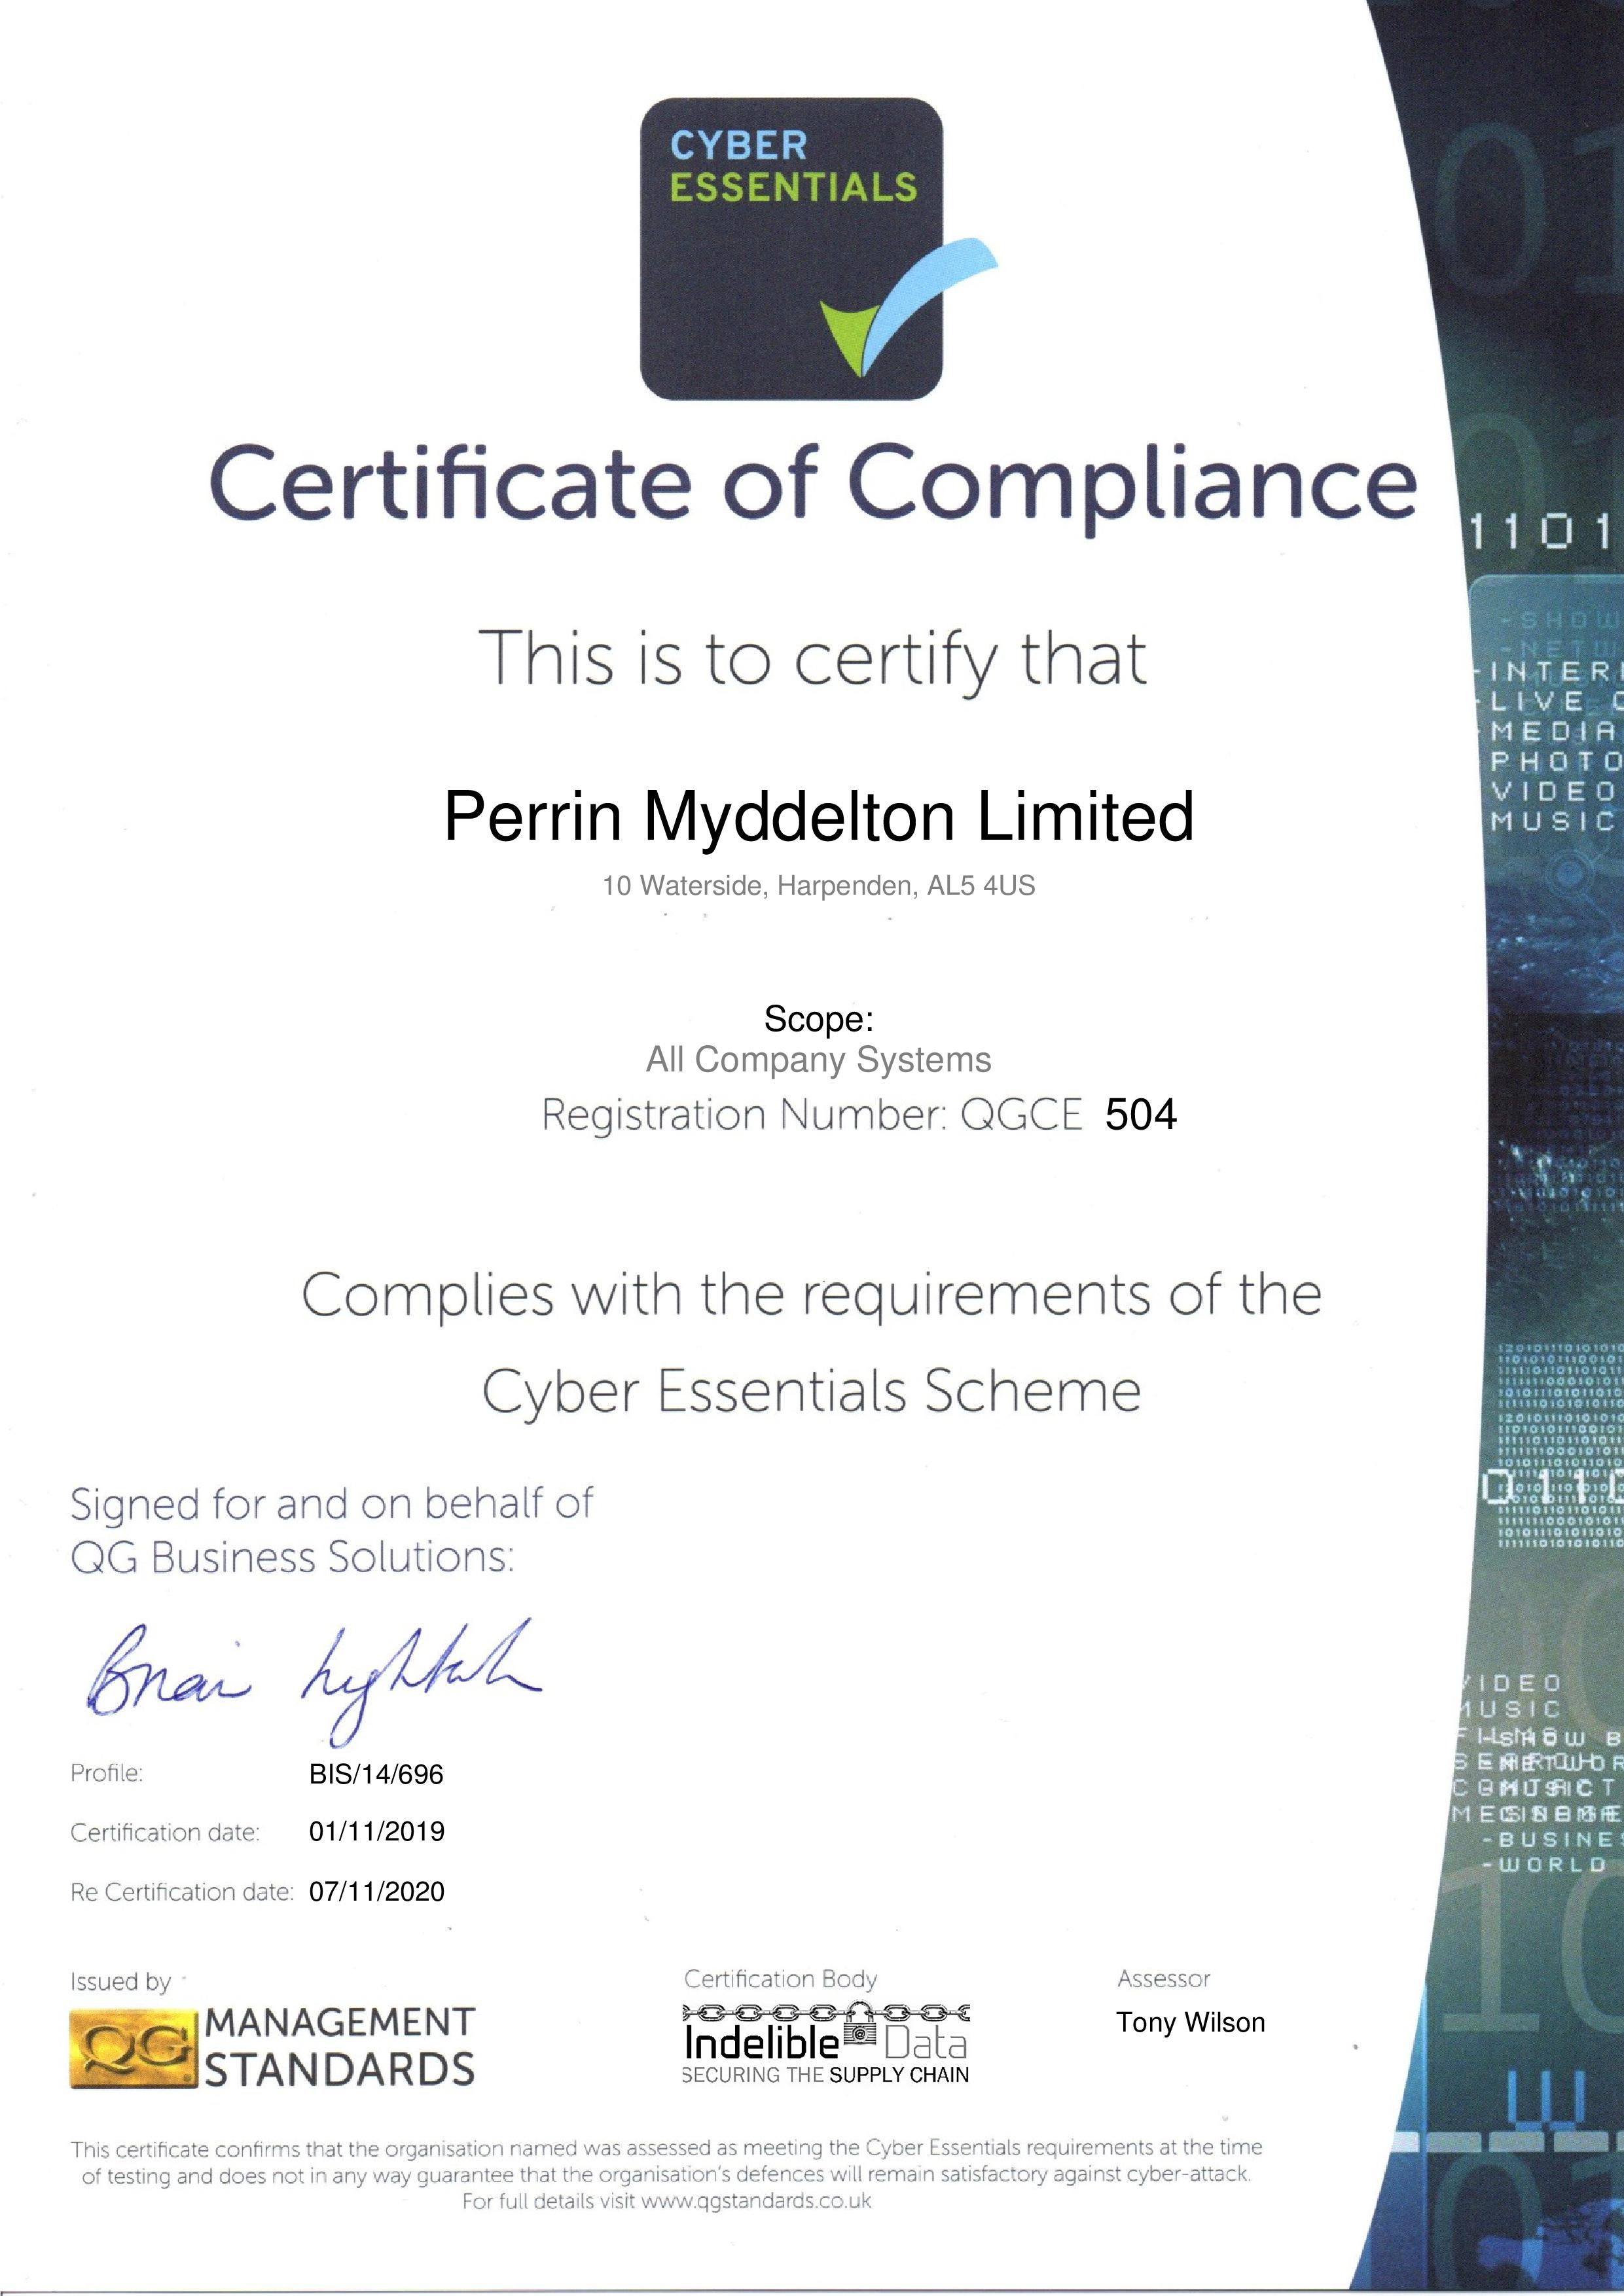 QGCE504 Perrin Myddelton Limited